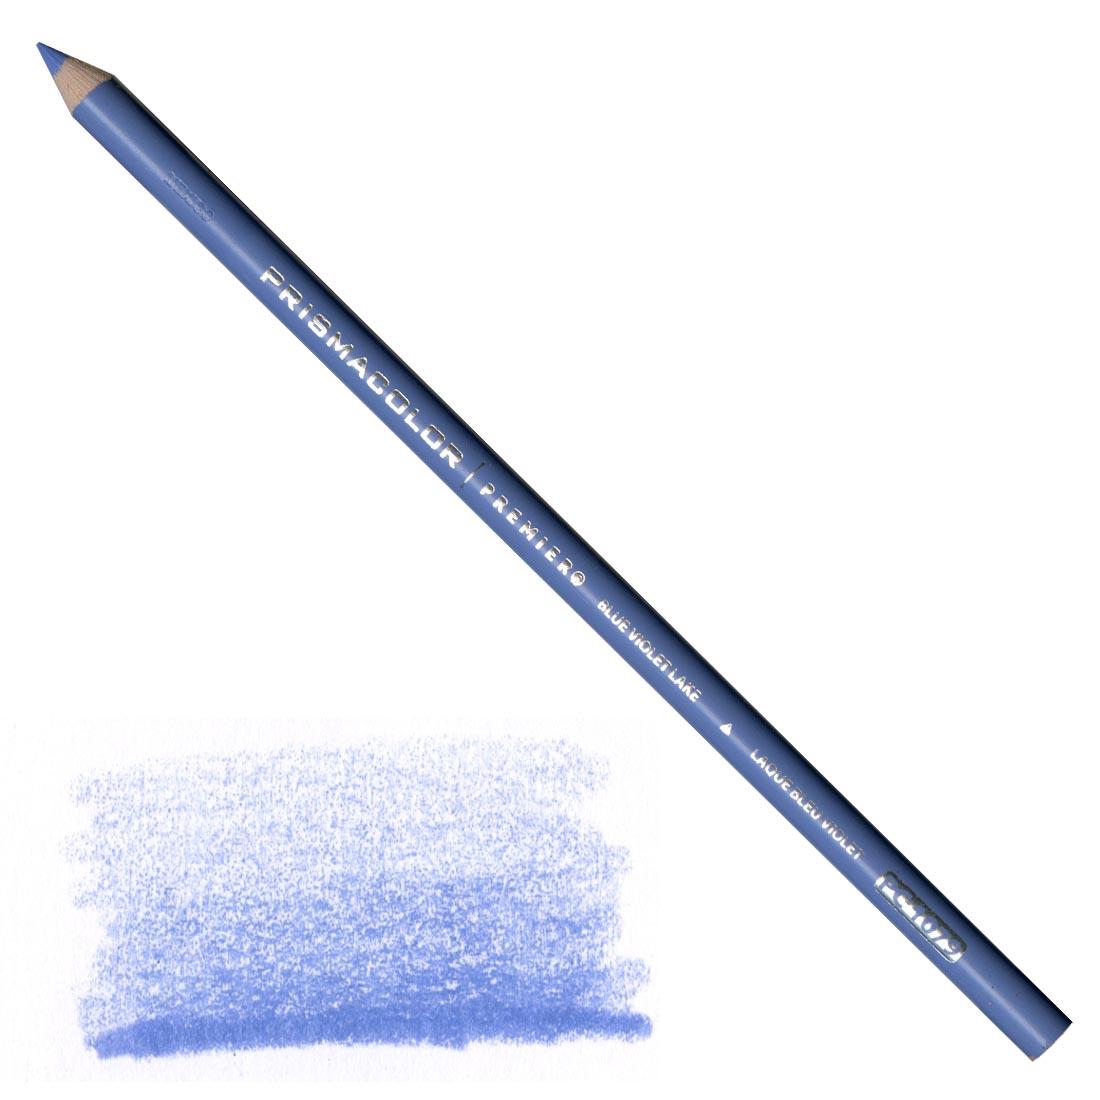 Blue Violet Lake Prismacolor Premier Colored Pencil with a sample colored swatch